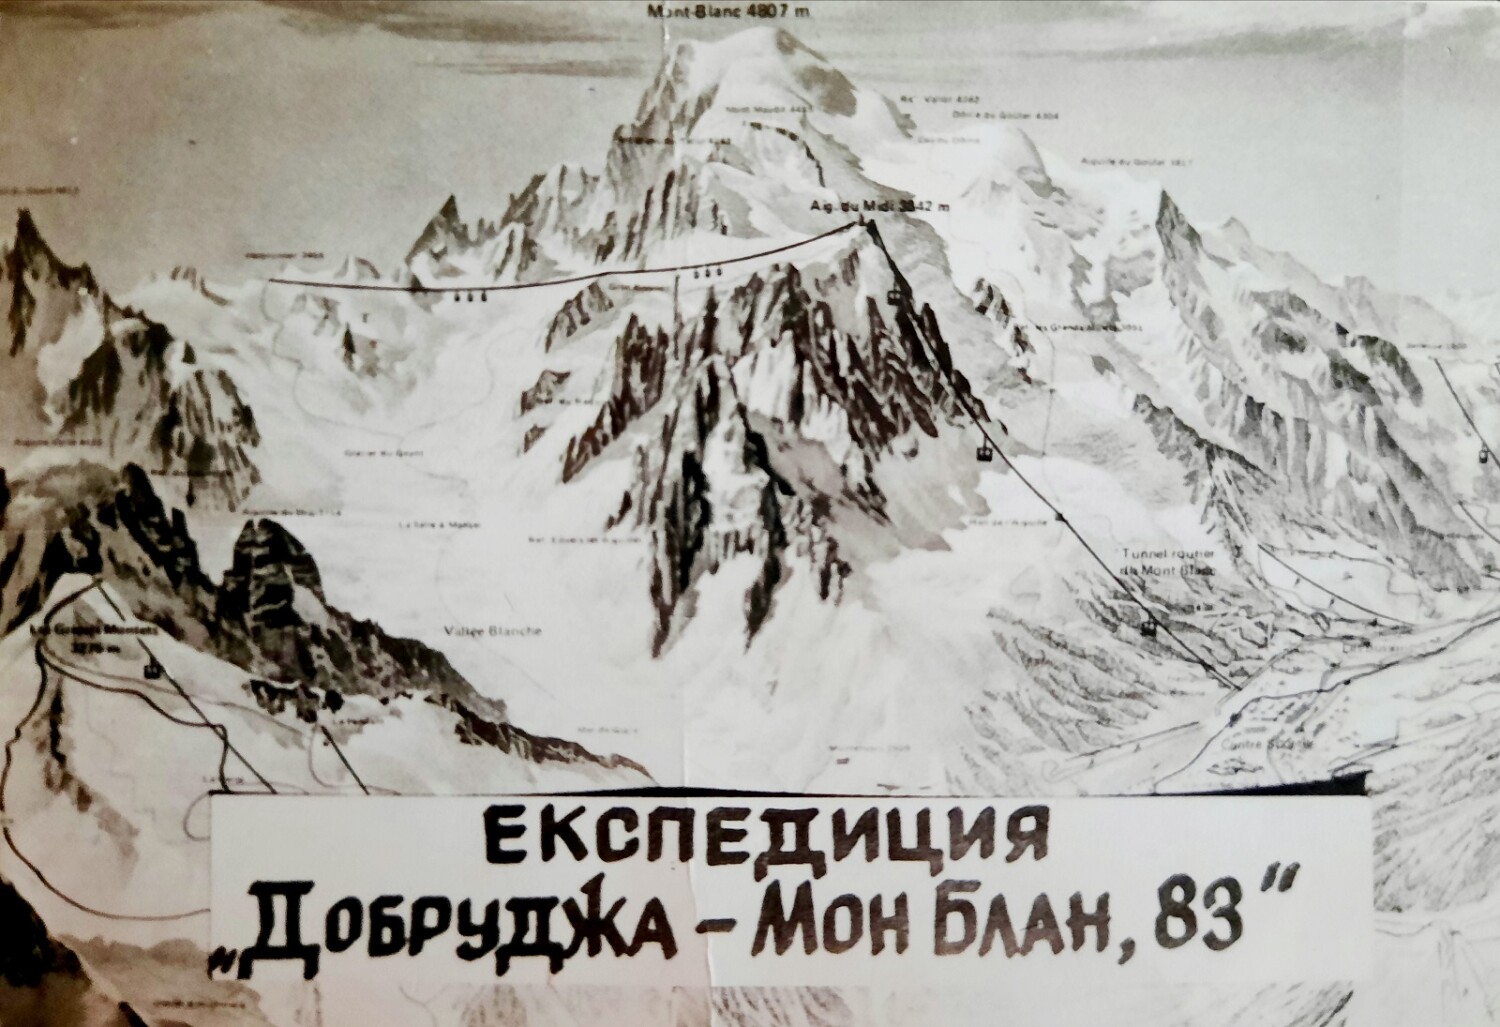 Експедиция "Добруджа - Монблан, 83"